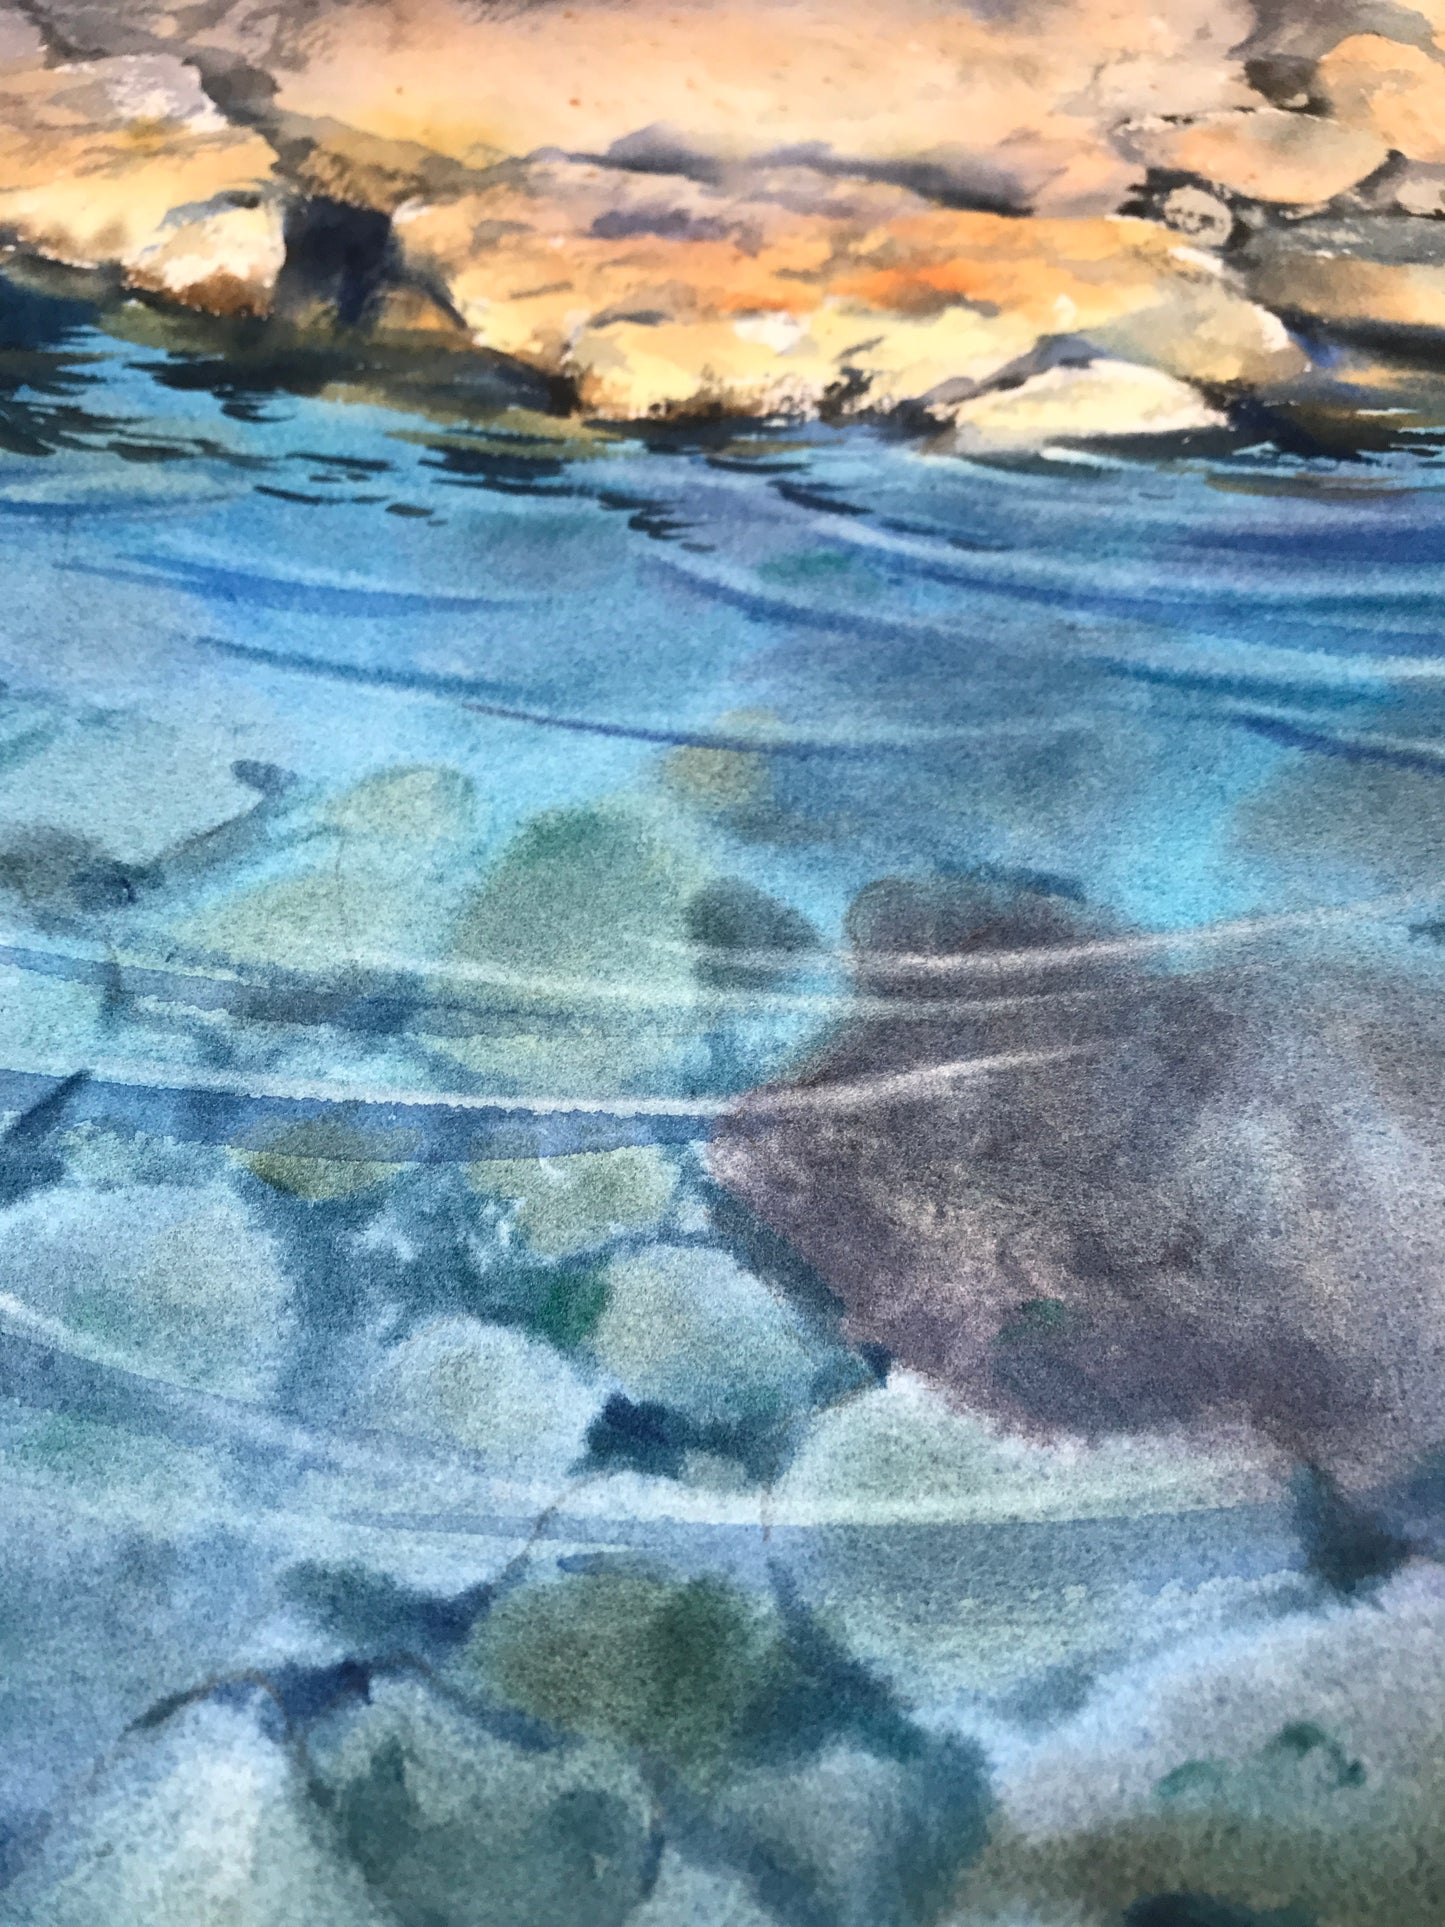 Sea Surface Painting, Original Watercolor Artwork, Undersea Stones Art, Coastal, Hand-painted Seascape Room Wall Decor